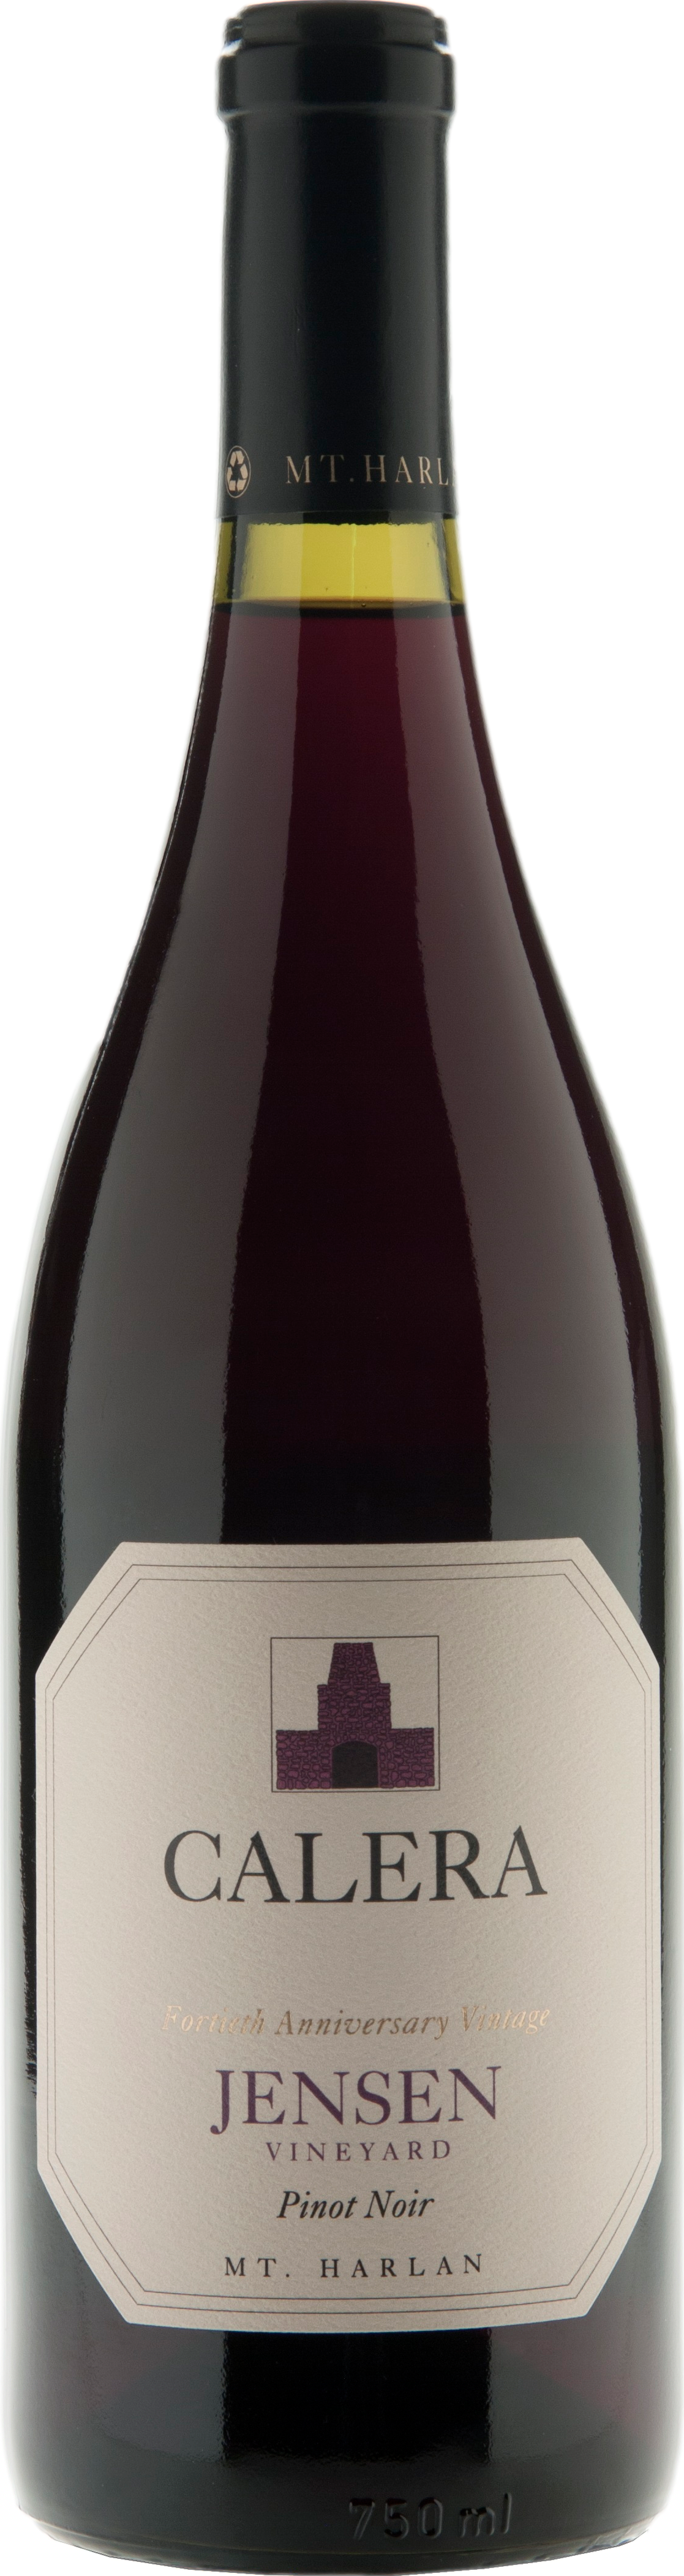 Calera Jensen Vineyard Pinot Noir 2019 Calera 8wines DACH